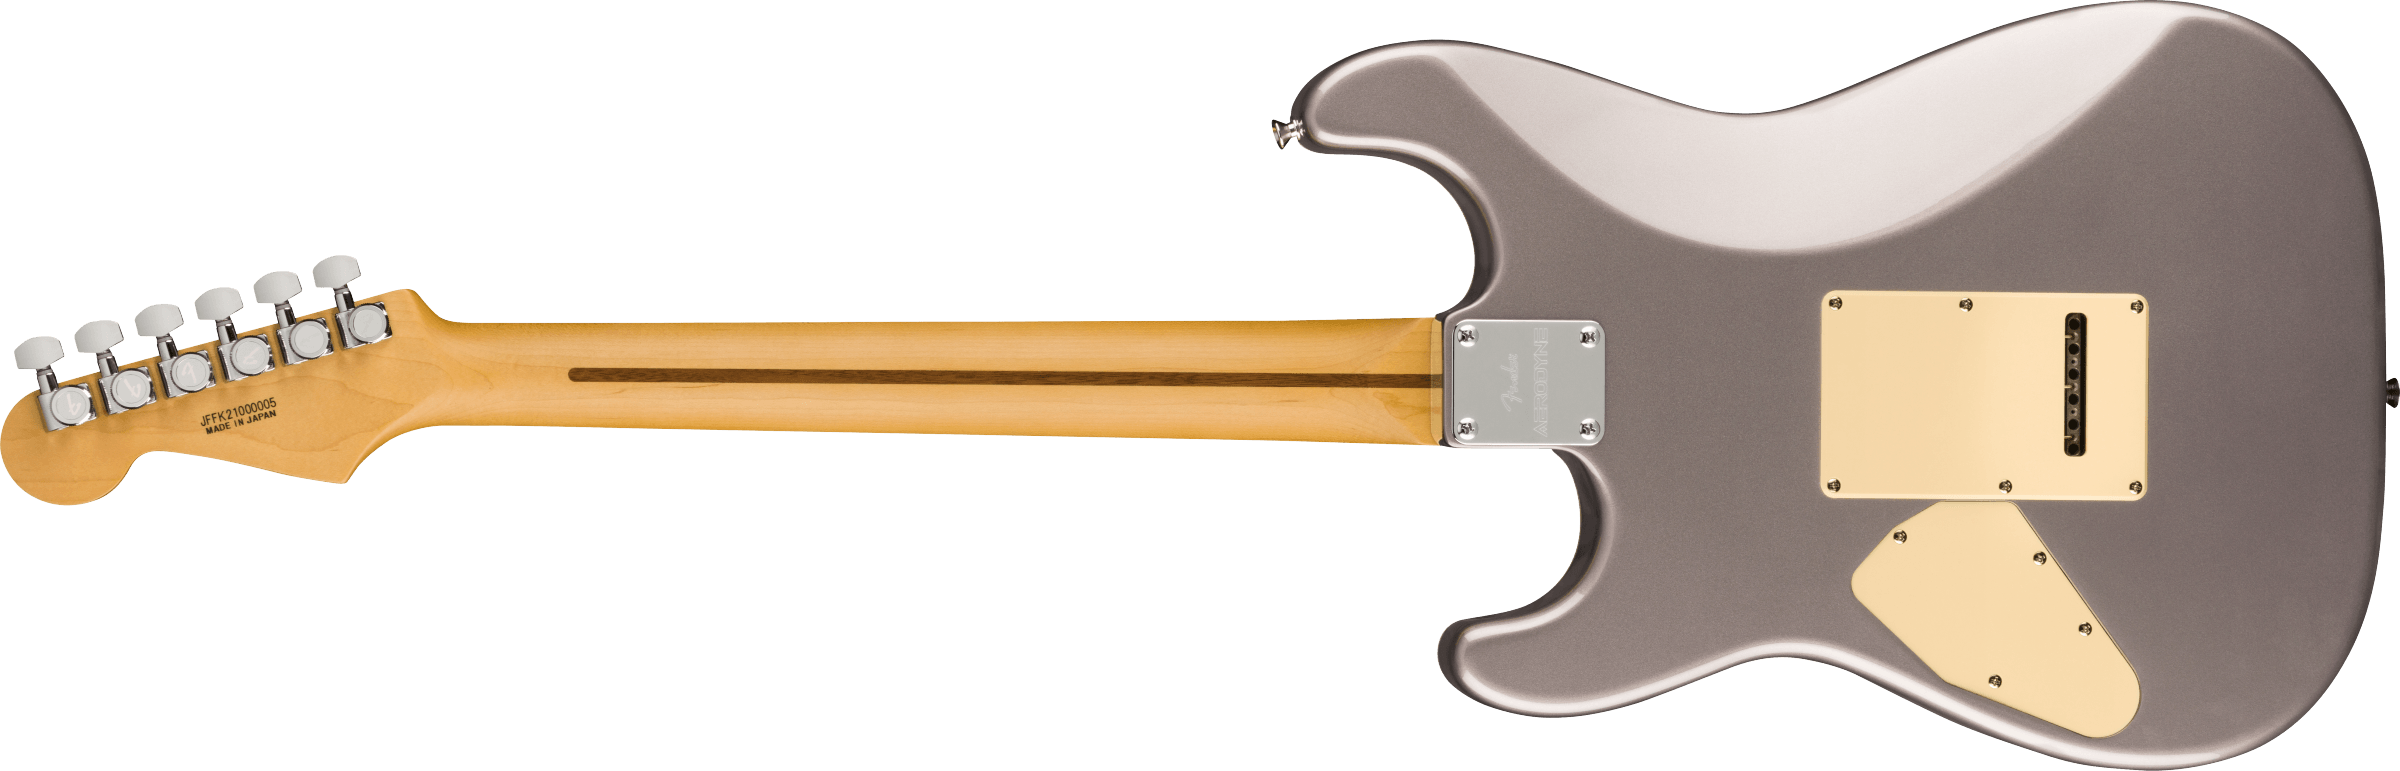 Fender Strat Aerodyne Special Jap Trem Hss Rw - Dolphin Gray Metallic - Str shape electric guitar - Variation 1